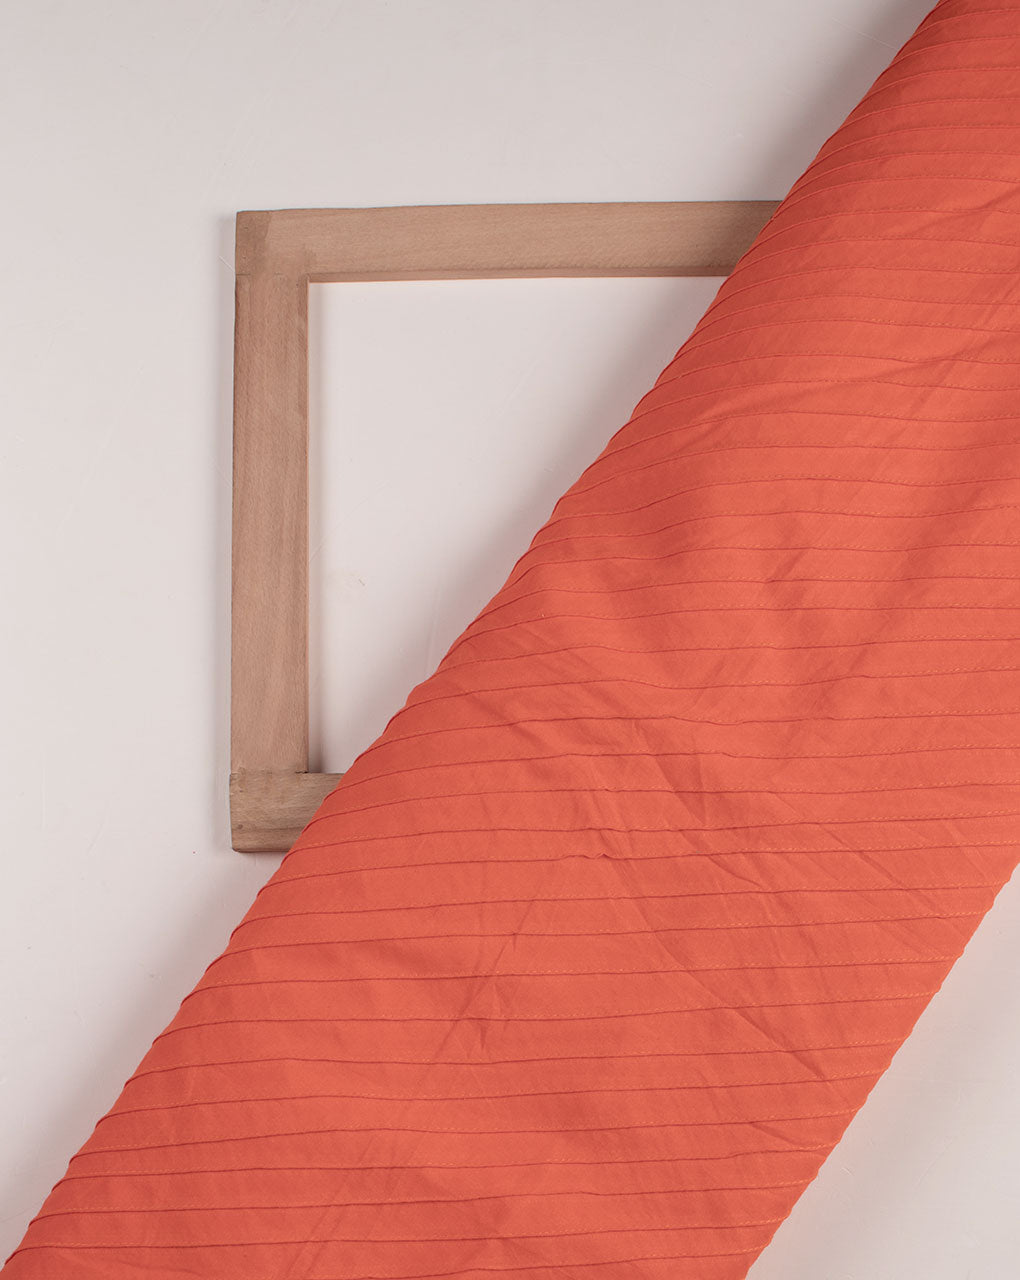 Orange Pin-Tucks Cotton Fabric ( Width 40 Inch ) - Fabriclore.com